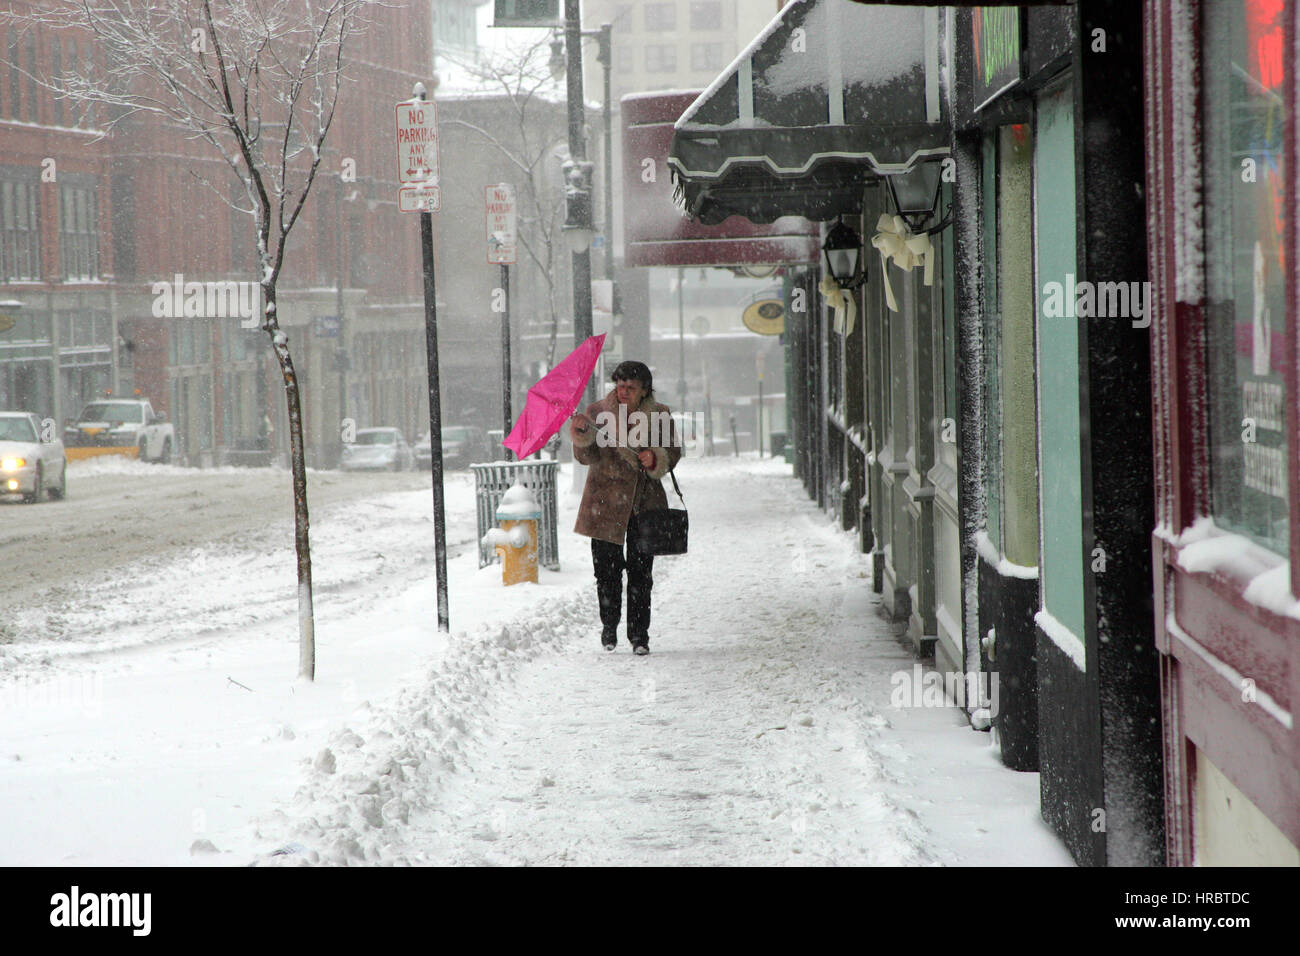 Snowstorm downtown Portland Maine woman walking sidewalk winter storm snow New England USA weather cold ice winter wind umbrella Stock Photo